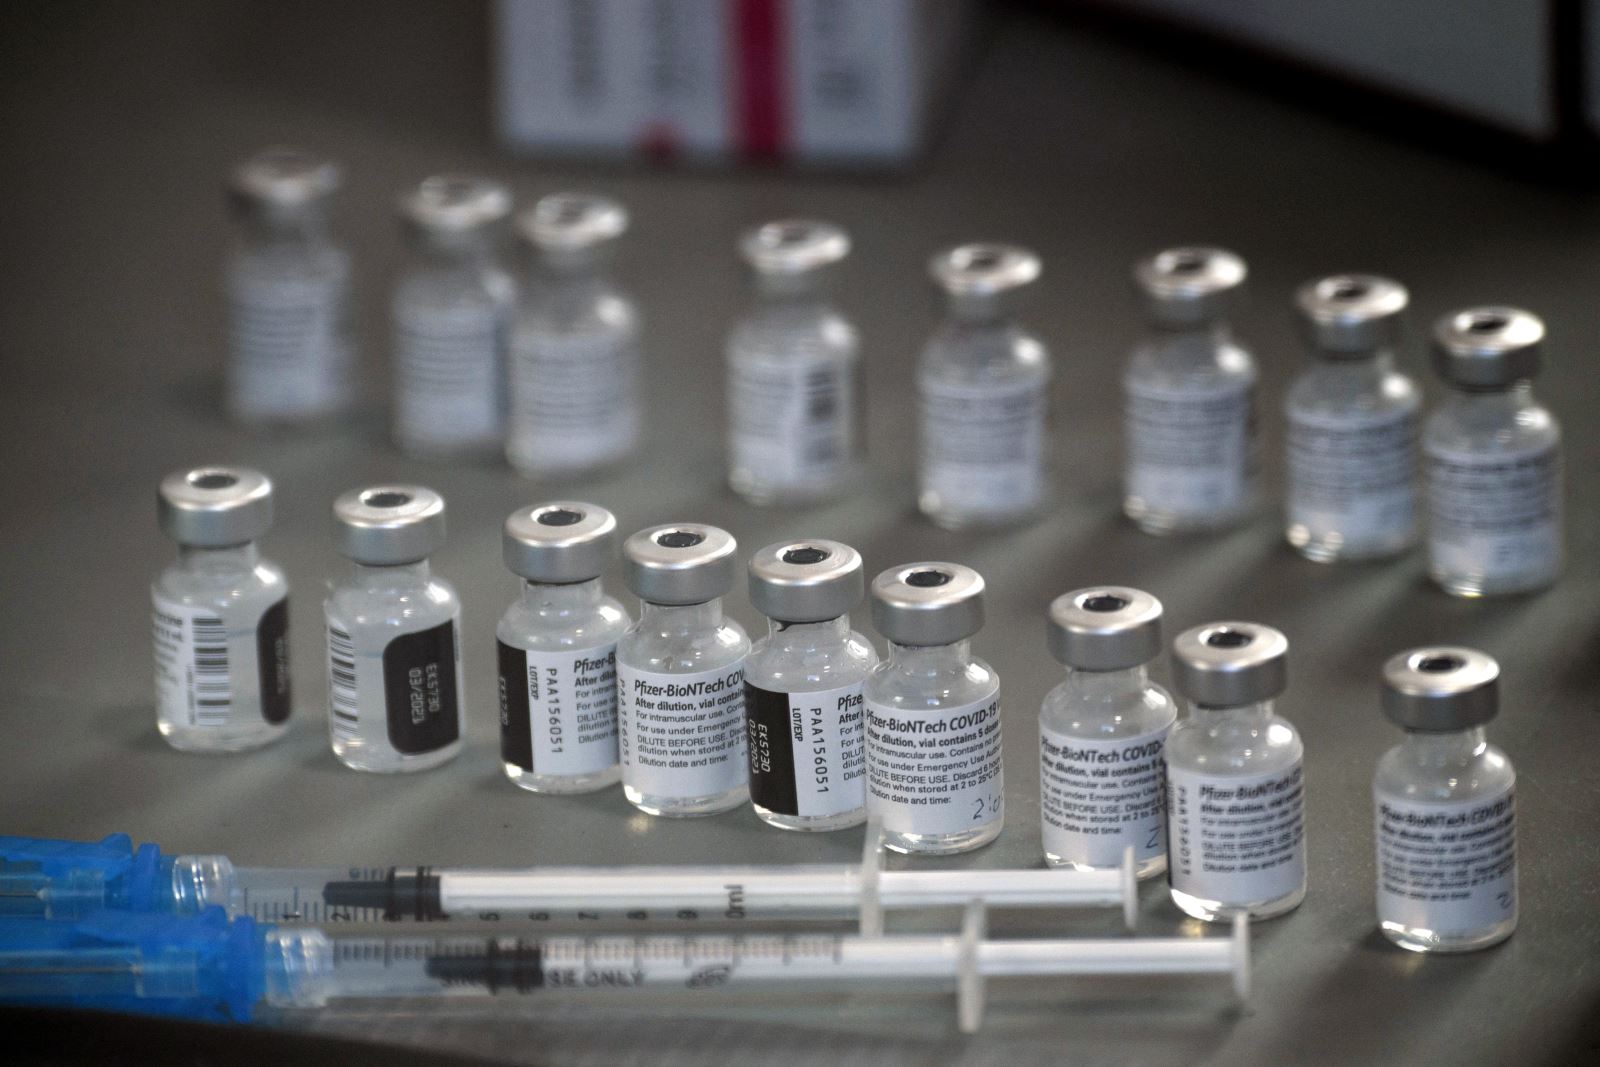 Vaccine COVID-19 của hãng Pfizer-BioNTech. Ảnh: AFP/TTXVN